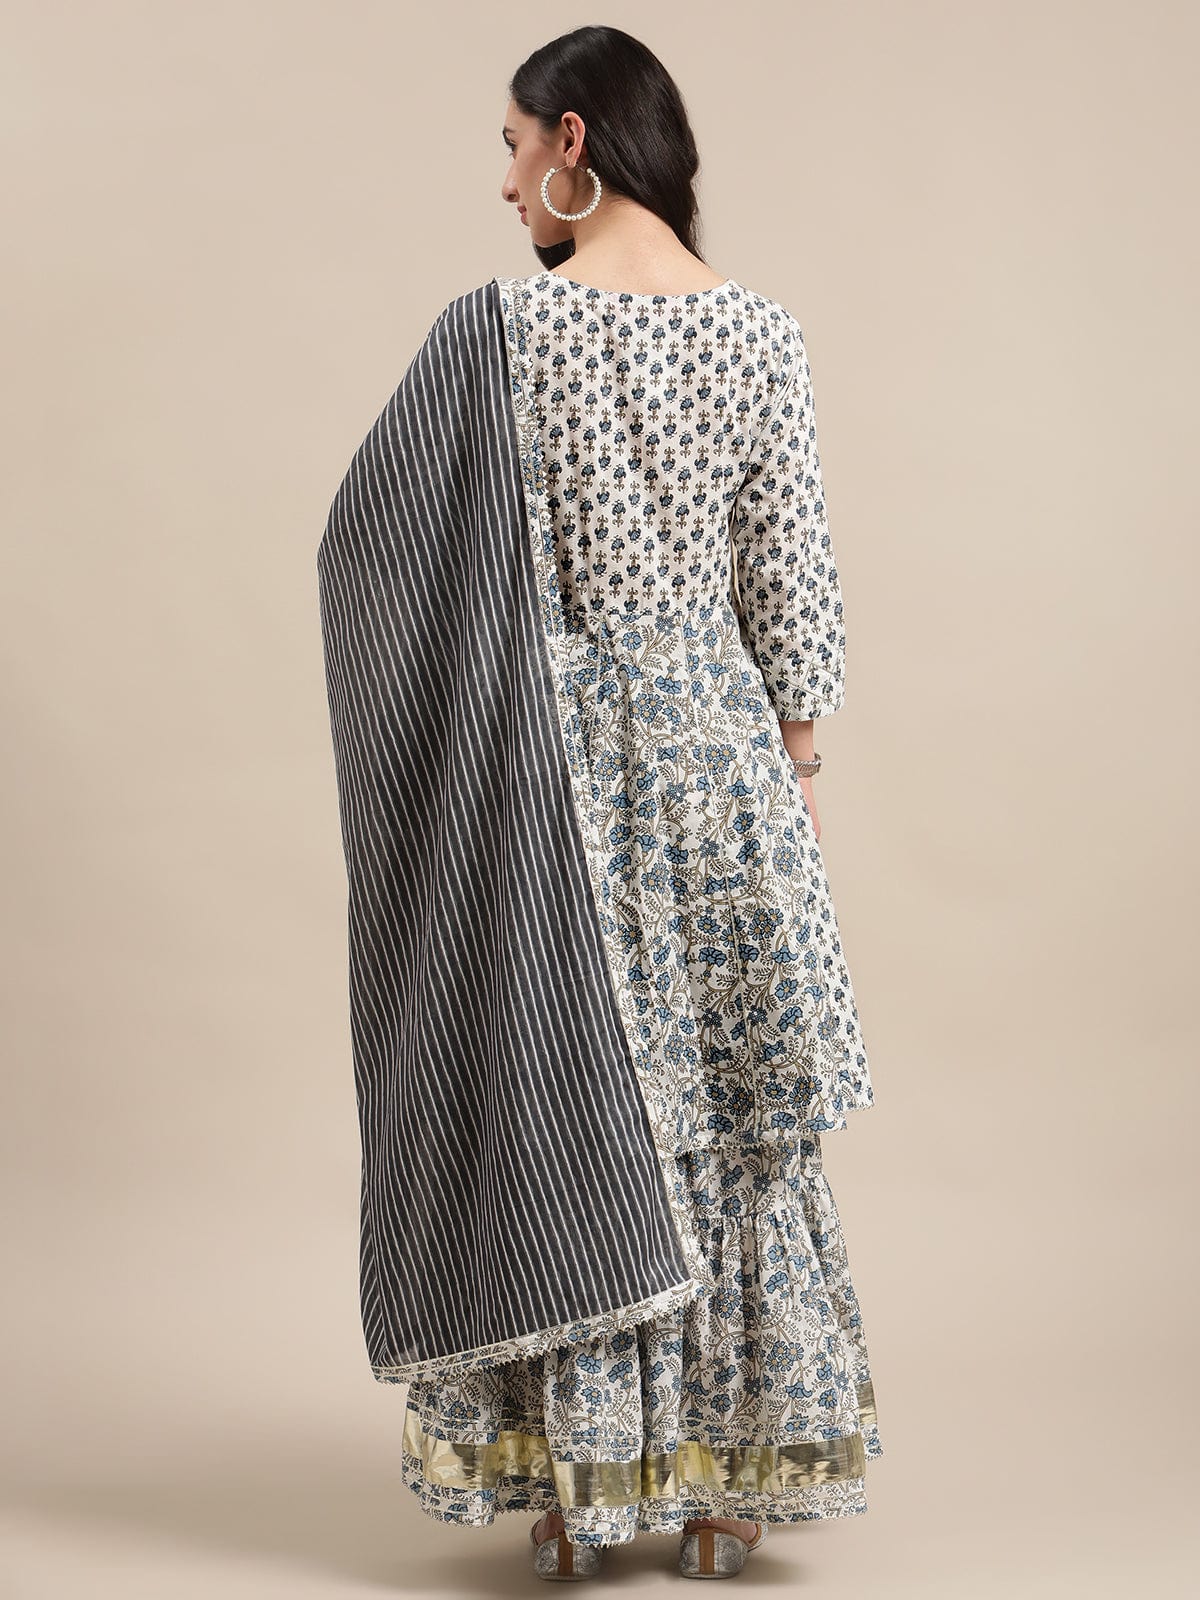 Women's White And Blue Floral Printed Anraklai Kurta Sharara Set With Stripe Dupatta - Varanga